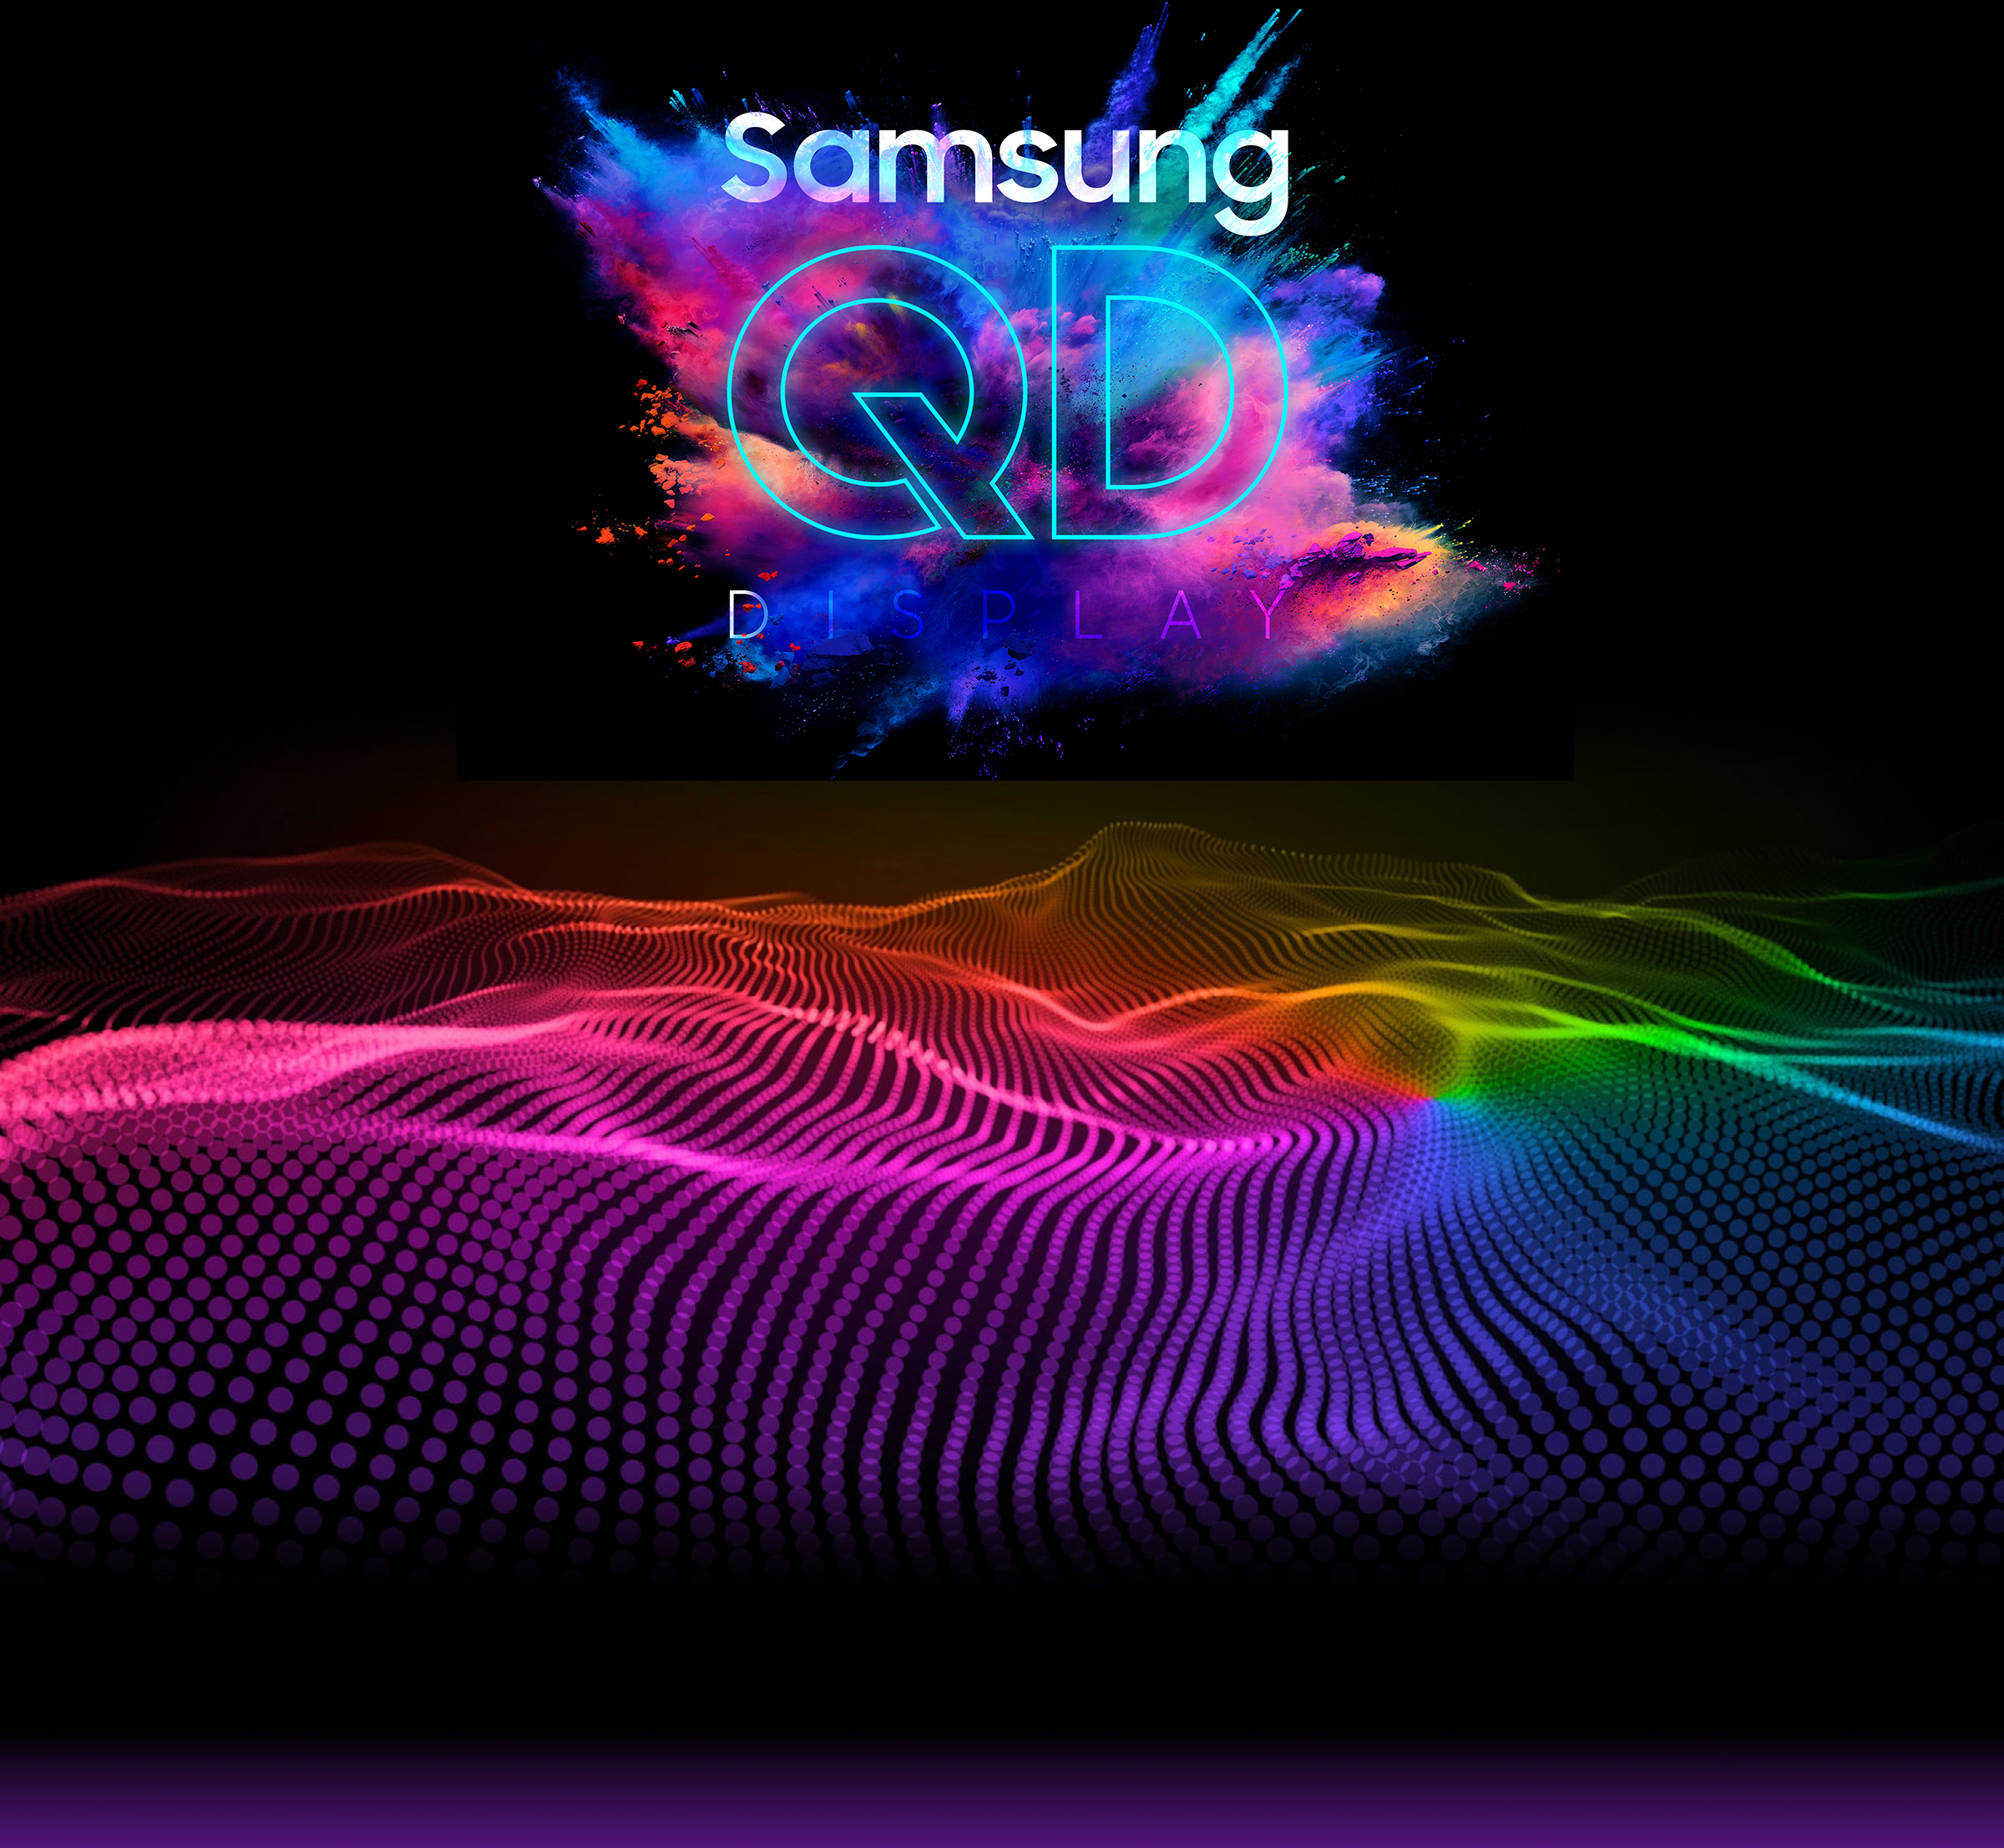 samsung galaxy logo wallpaper hd